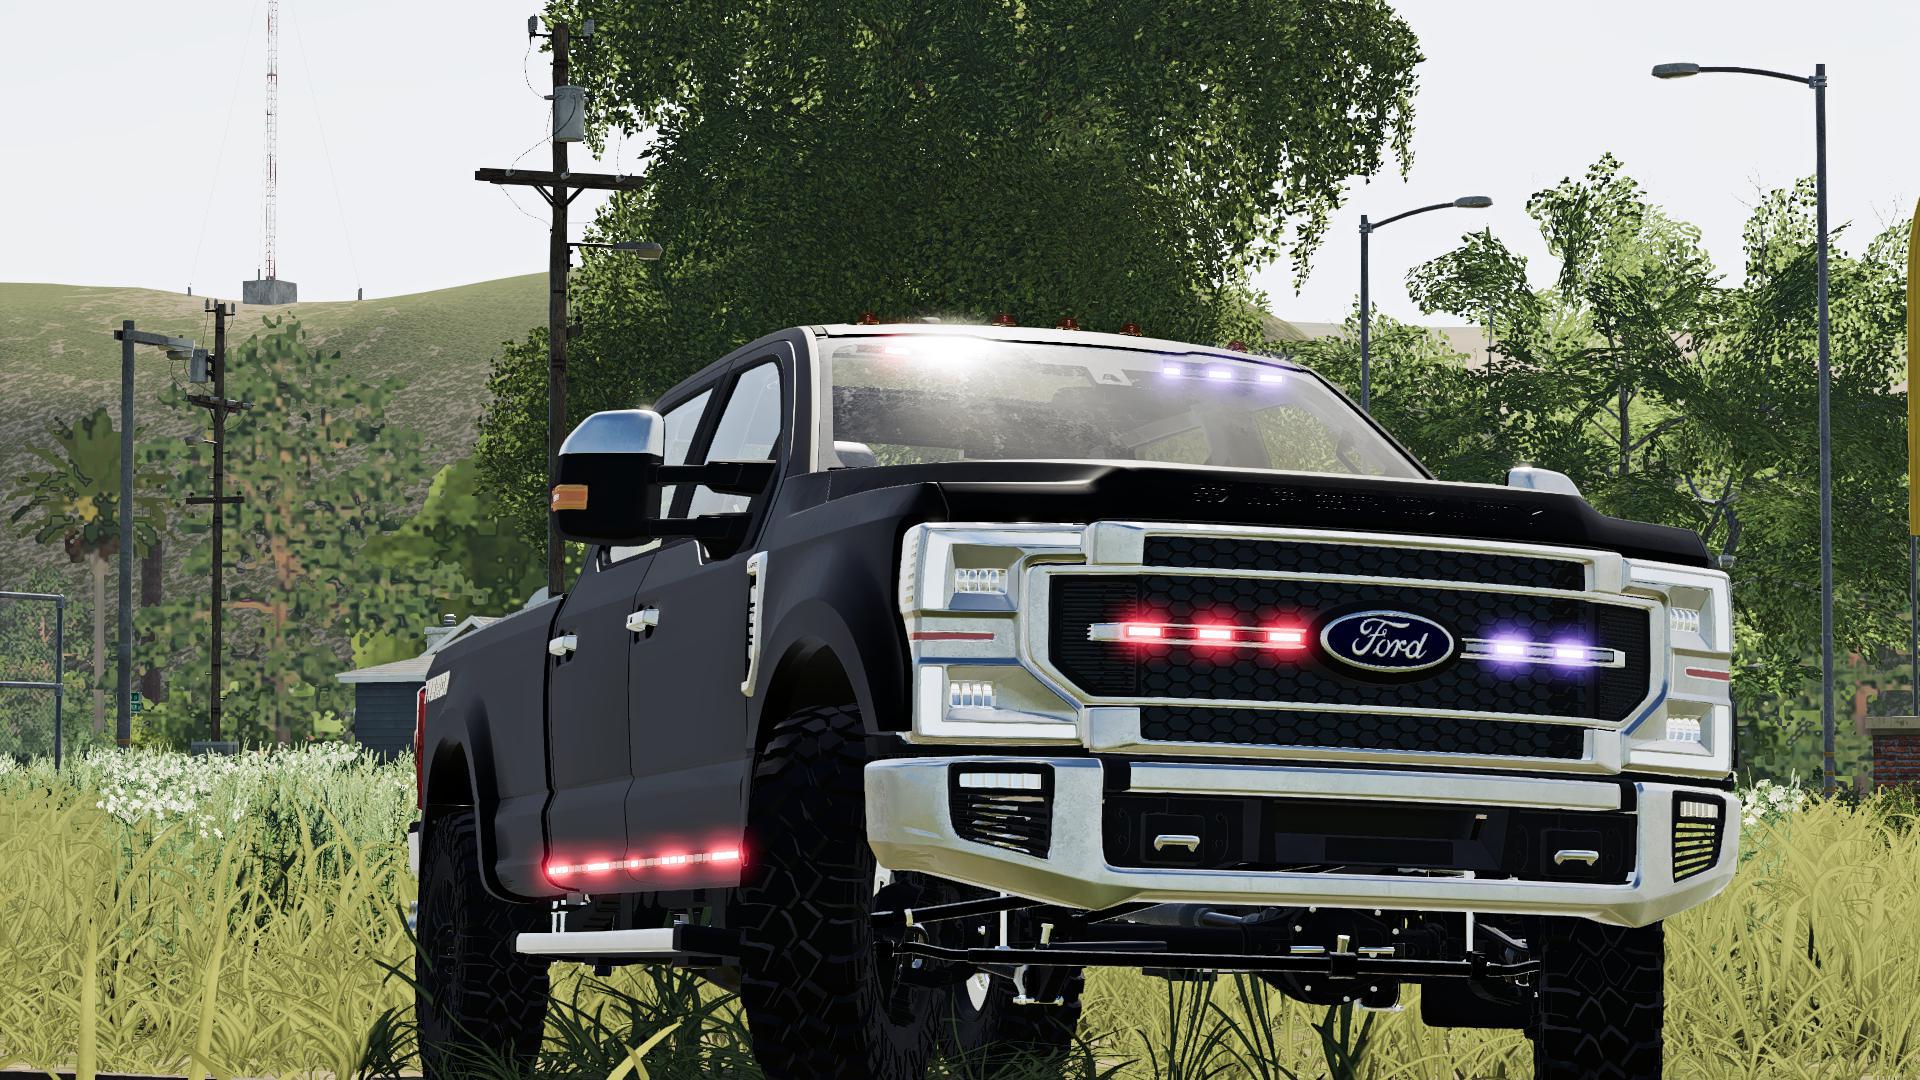 2020 Ford Ghost Police Truck V122 Fs19 Landwirtschafts Simulator 19